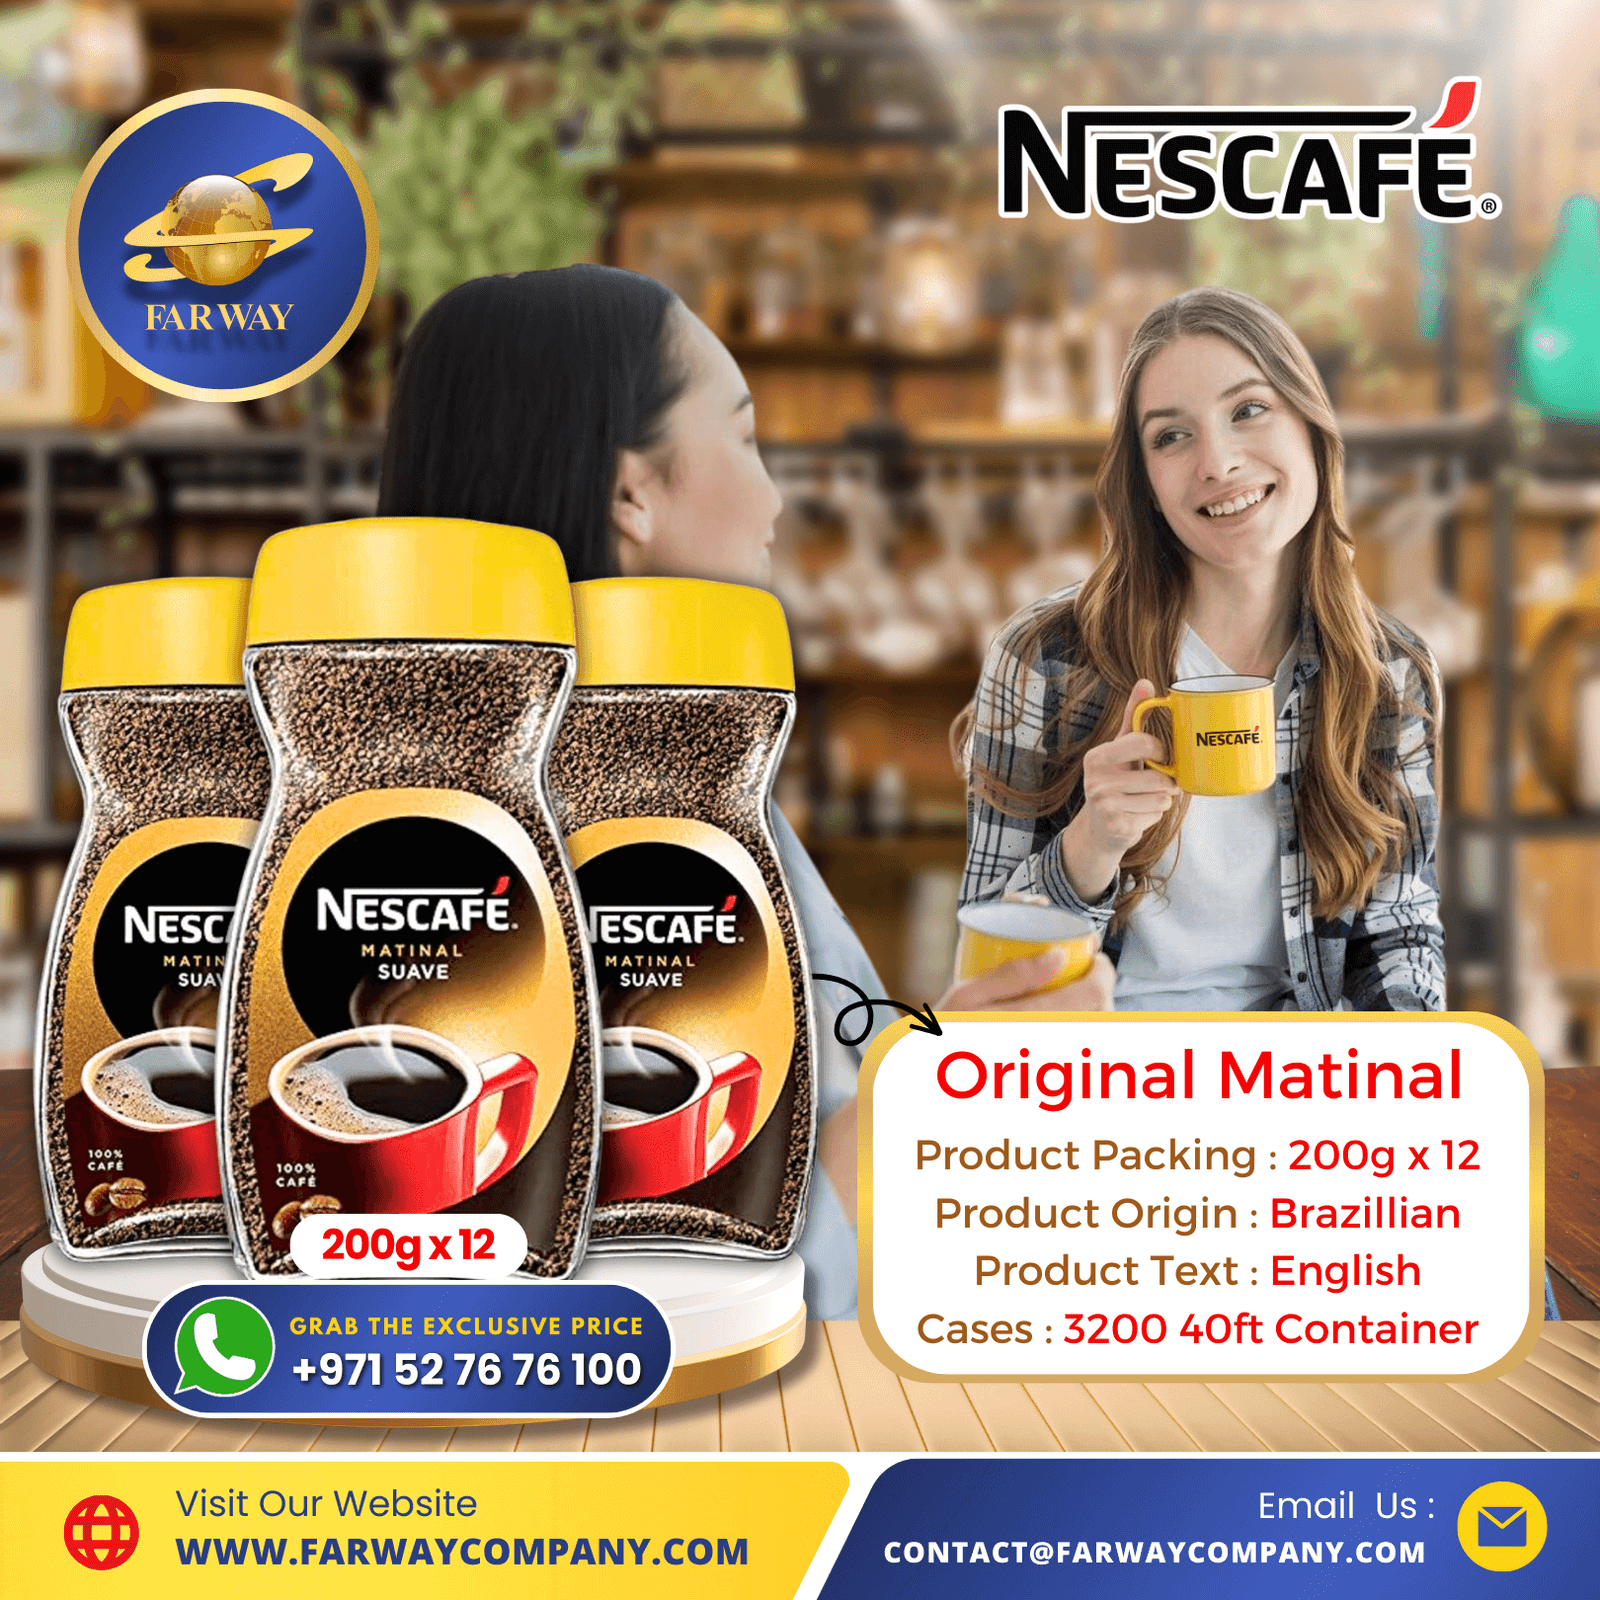 Nescafe Original Matinal Coffee Importer, Exporter & Coffee Distributor in Dubai, UAE, Middle East